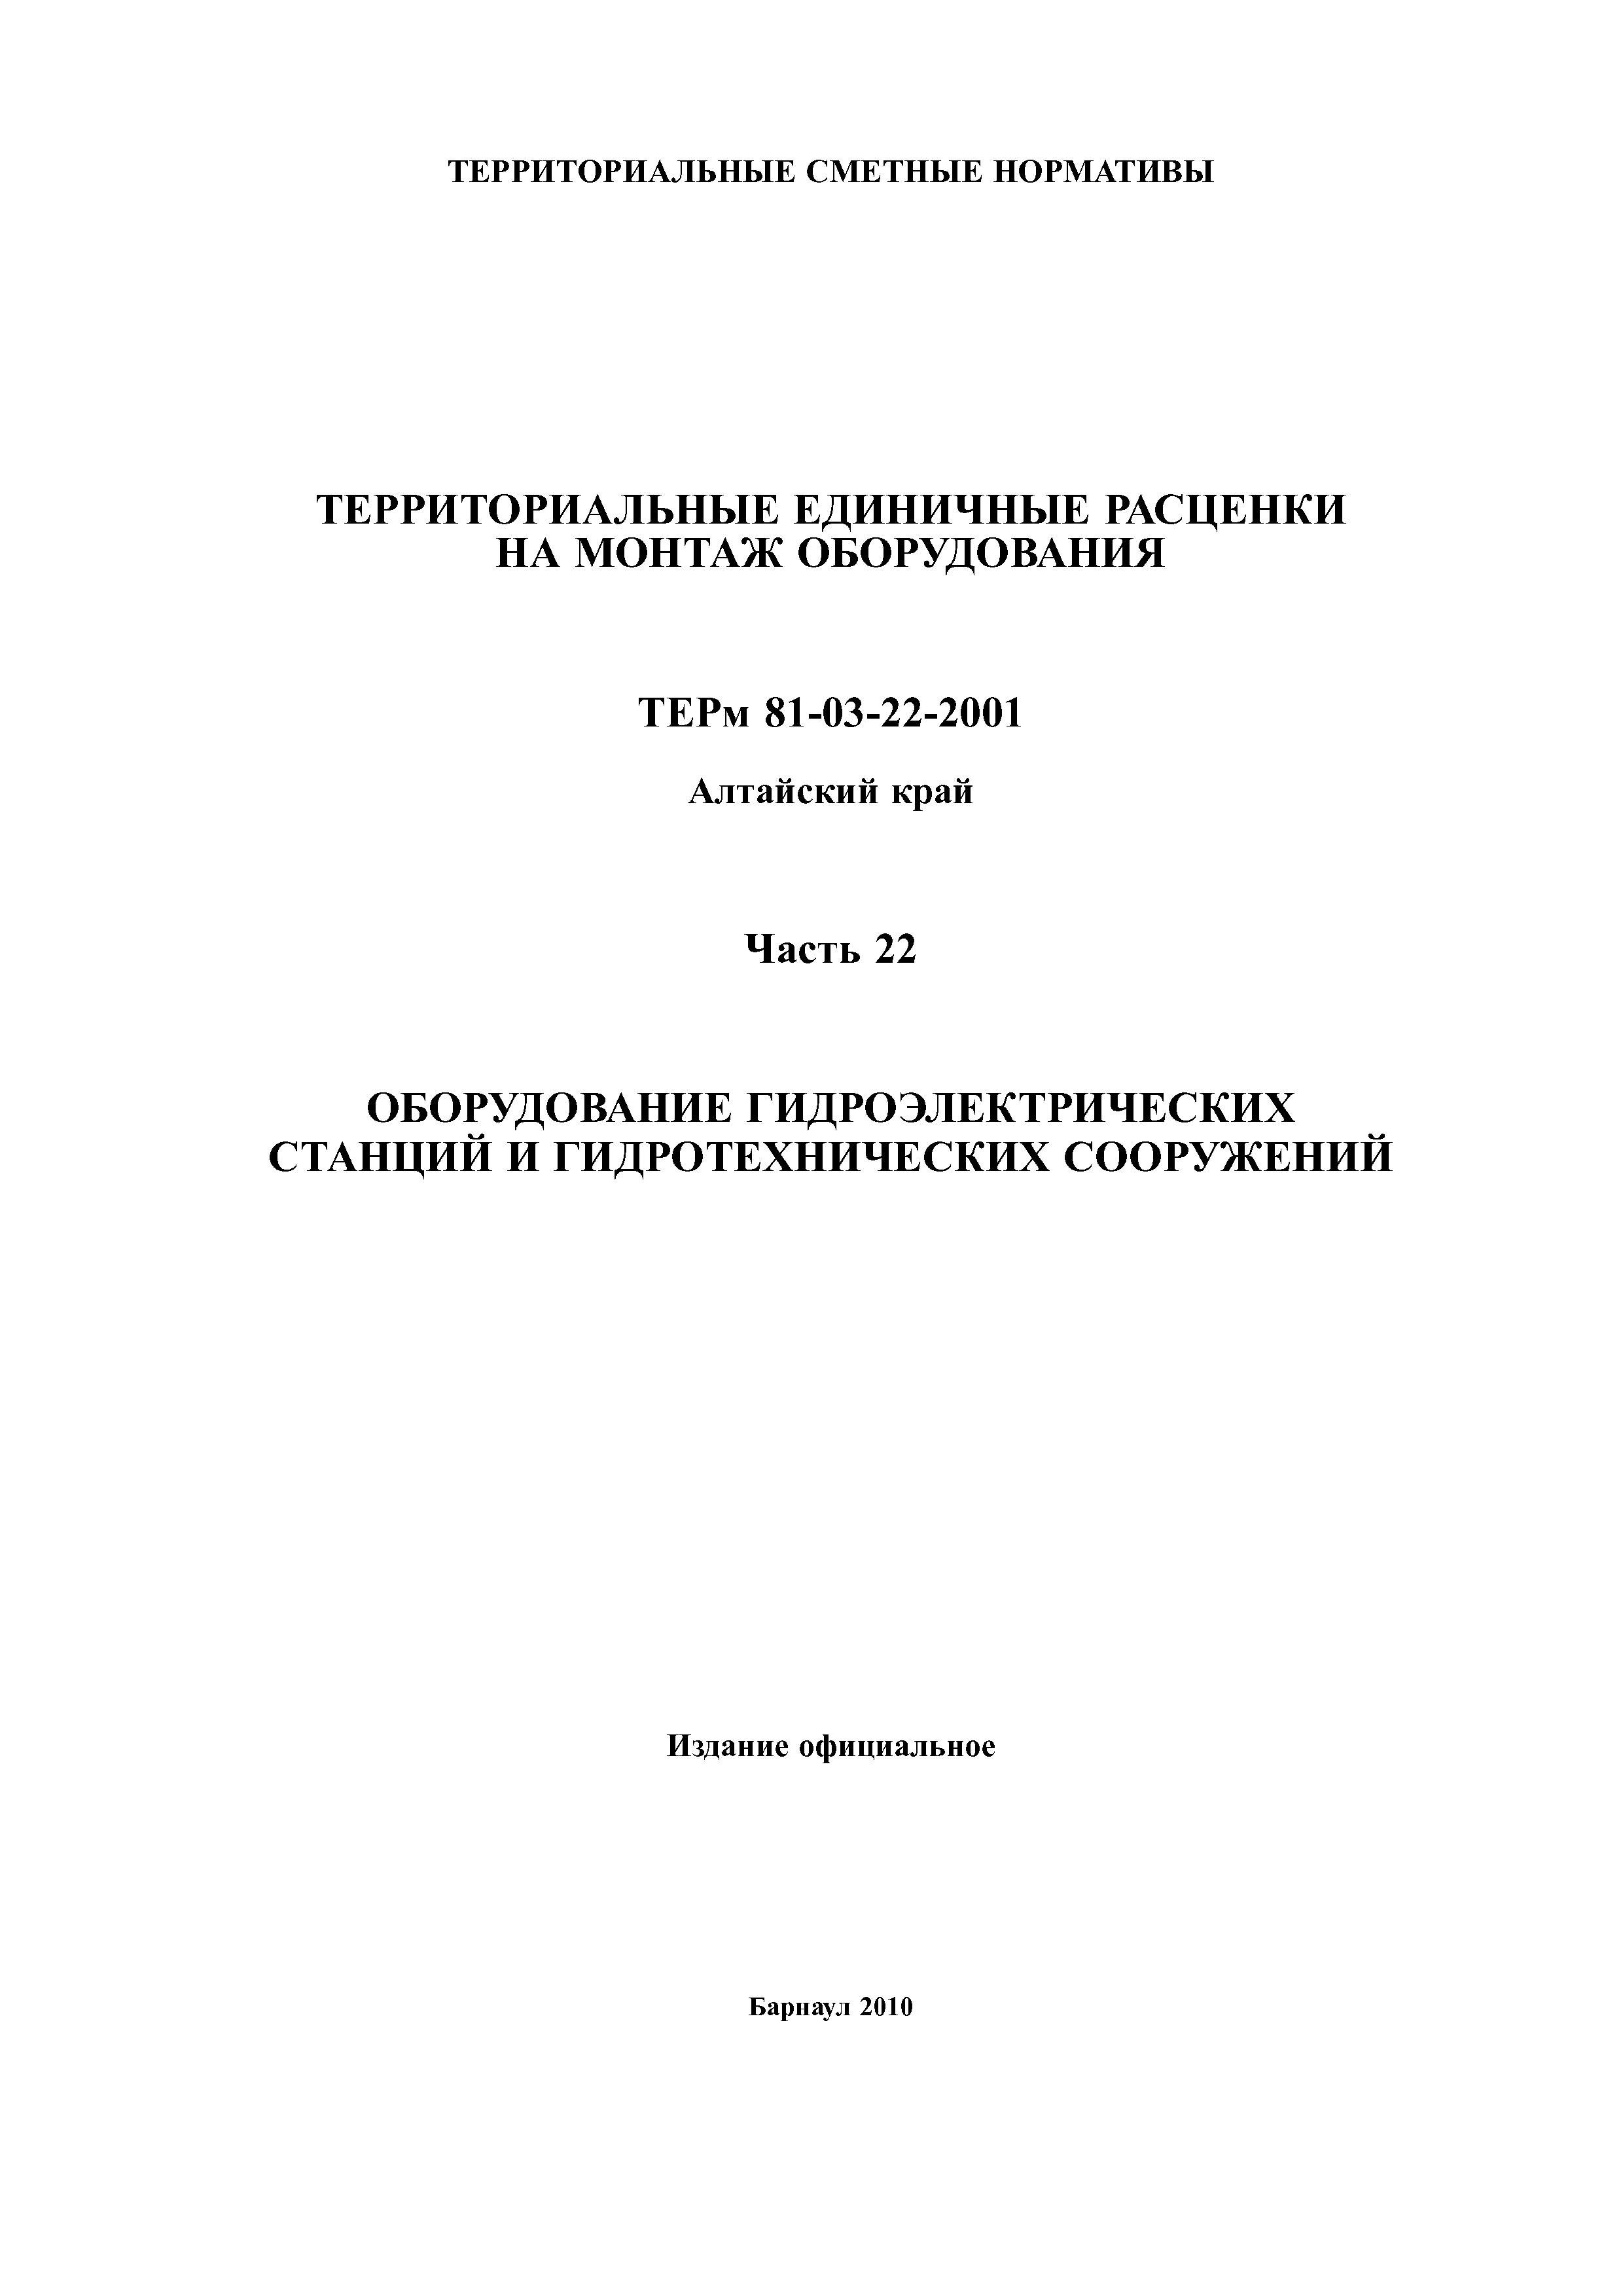 ТЕРм Алтайский край 81-03-22-2001